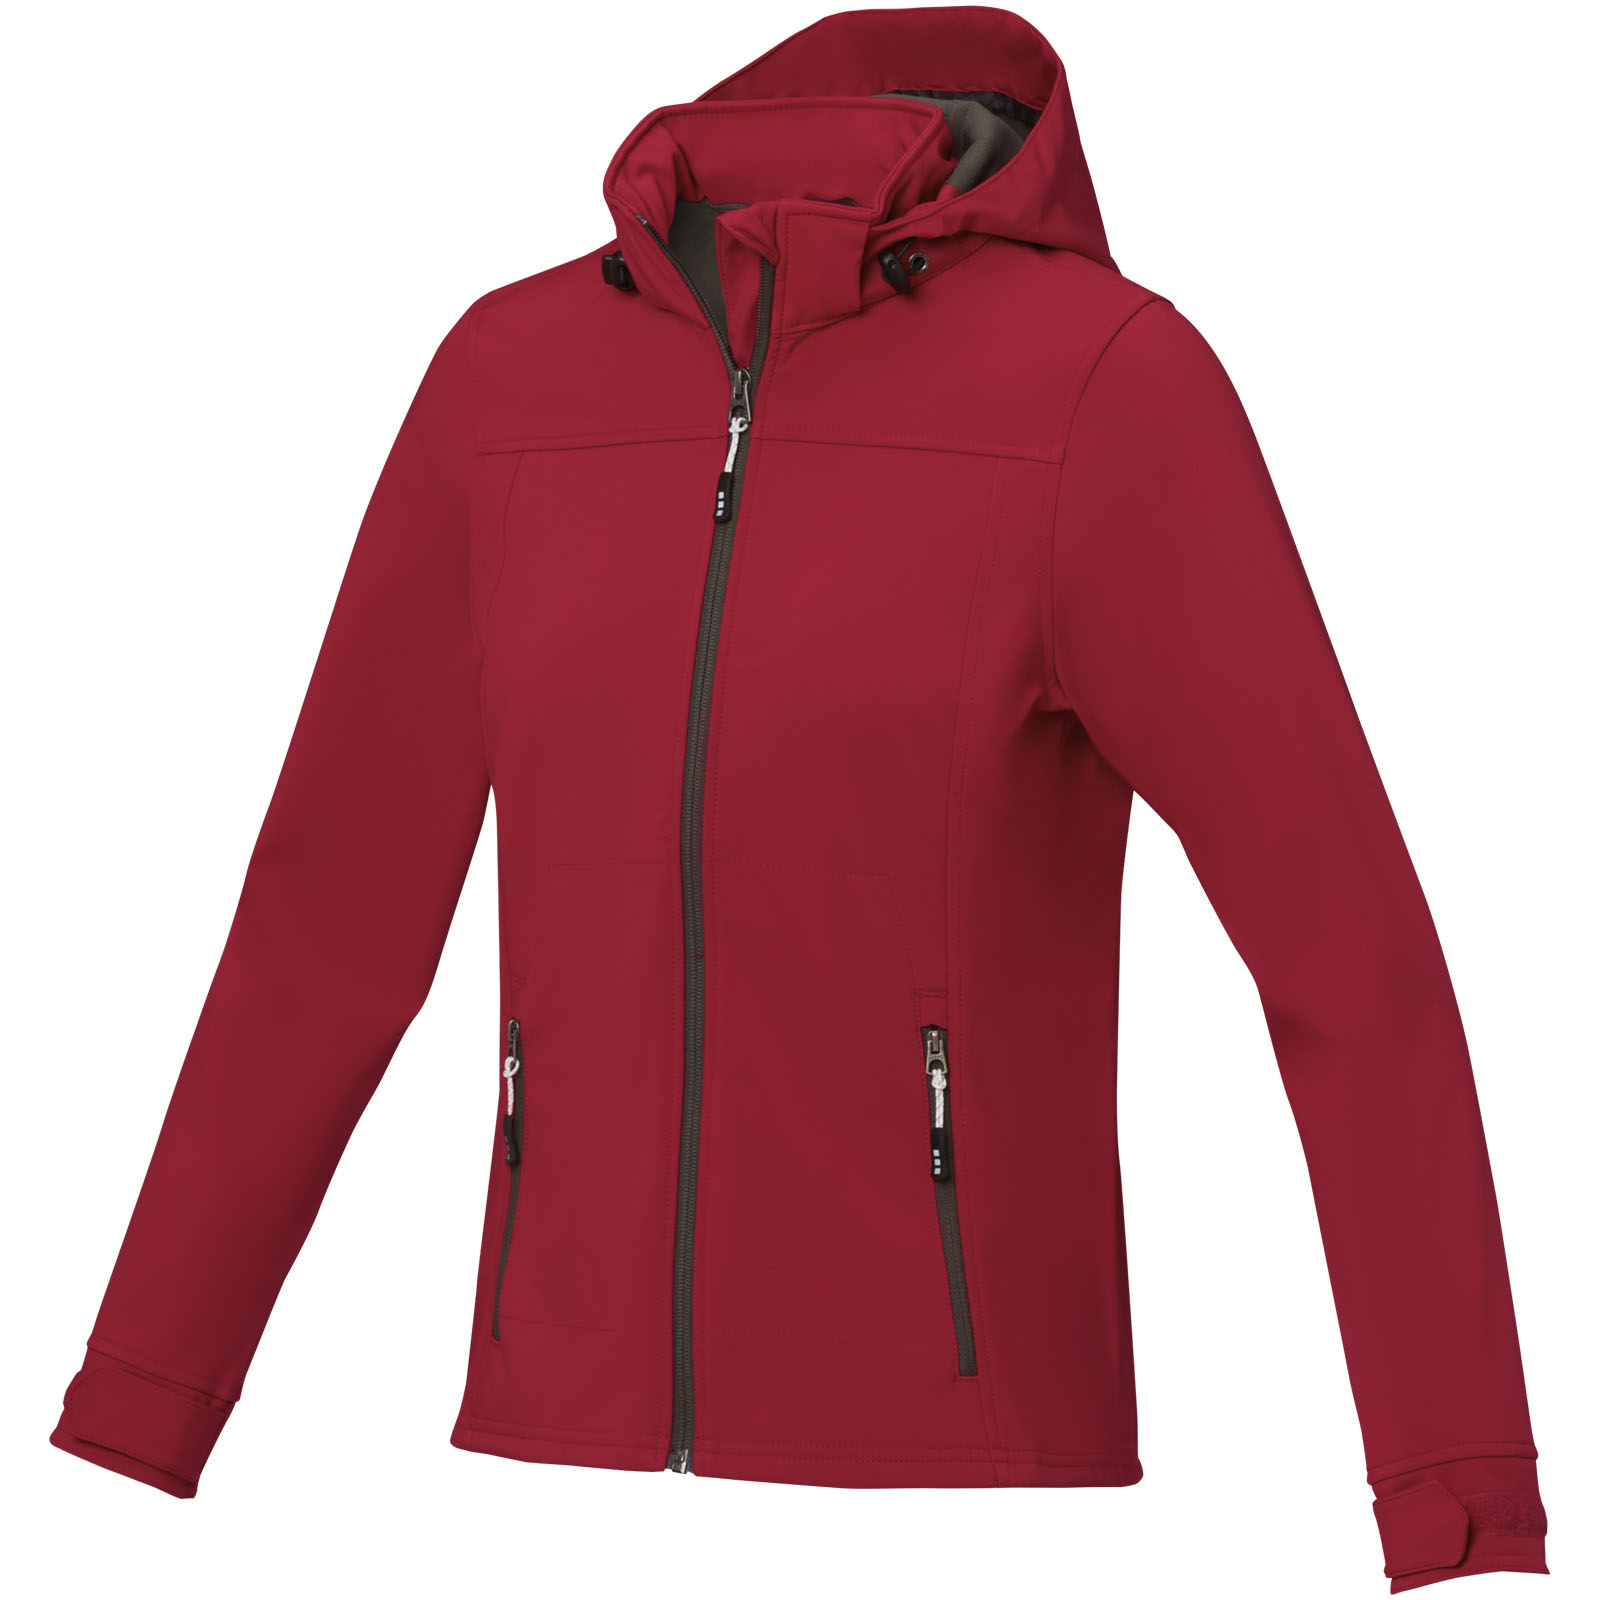 Jackets - Langley women's softshell jacket